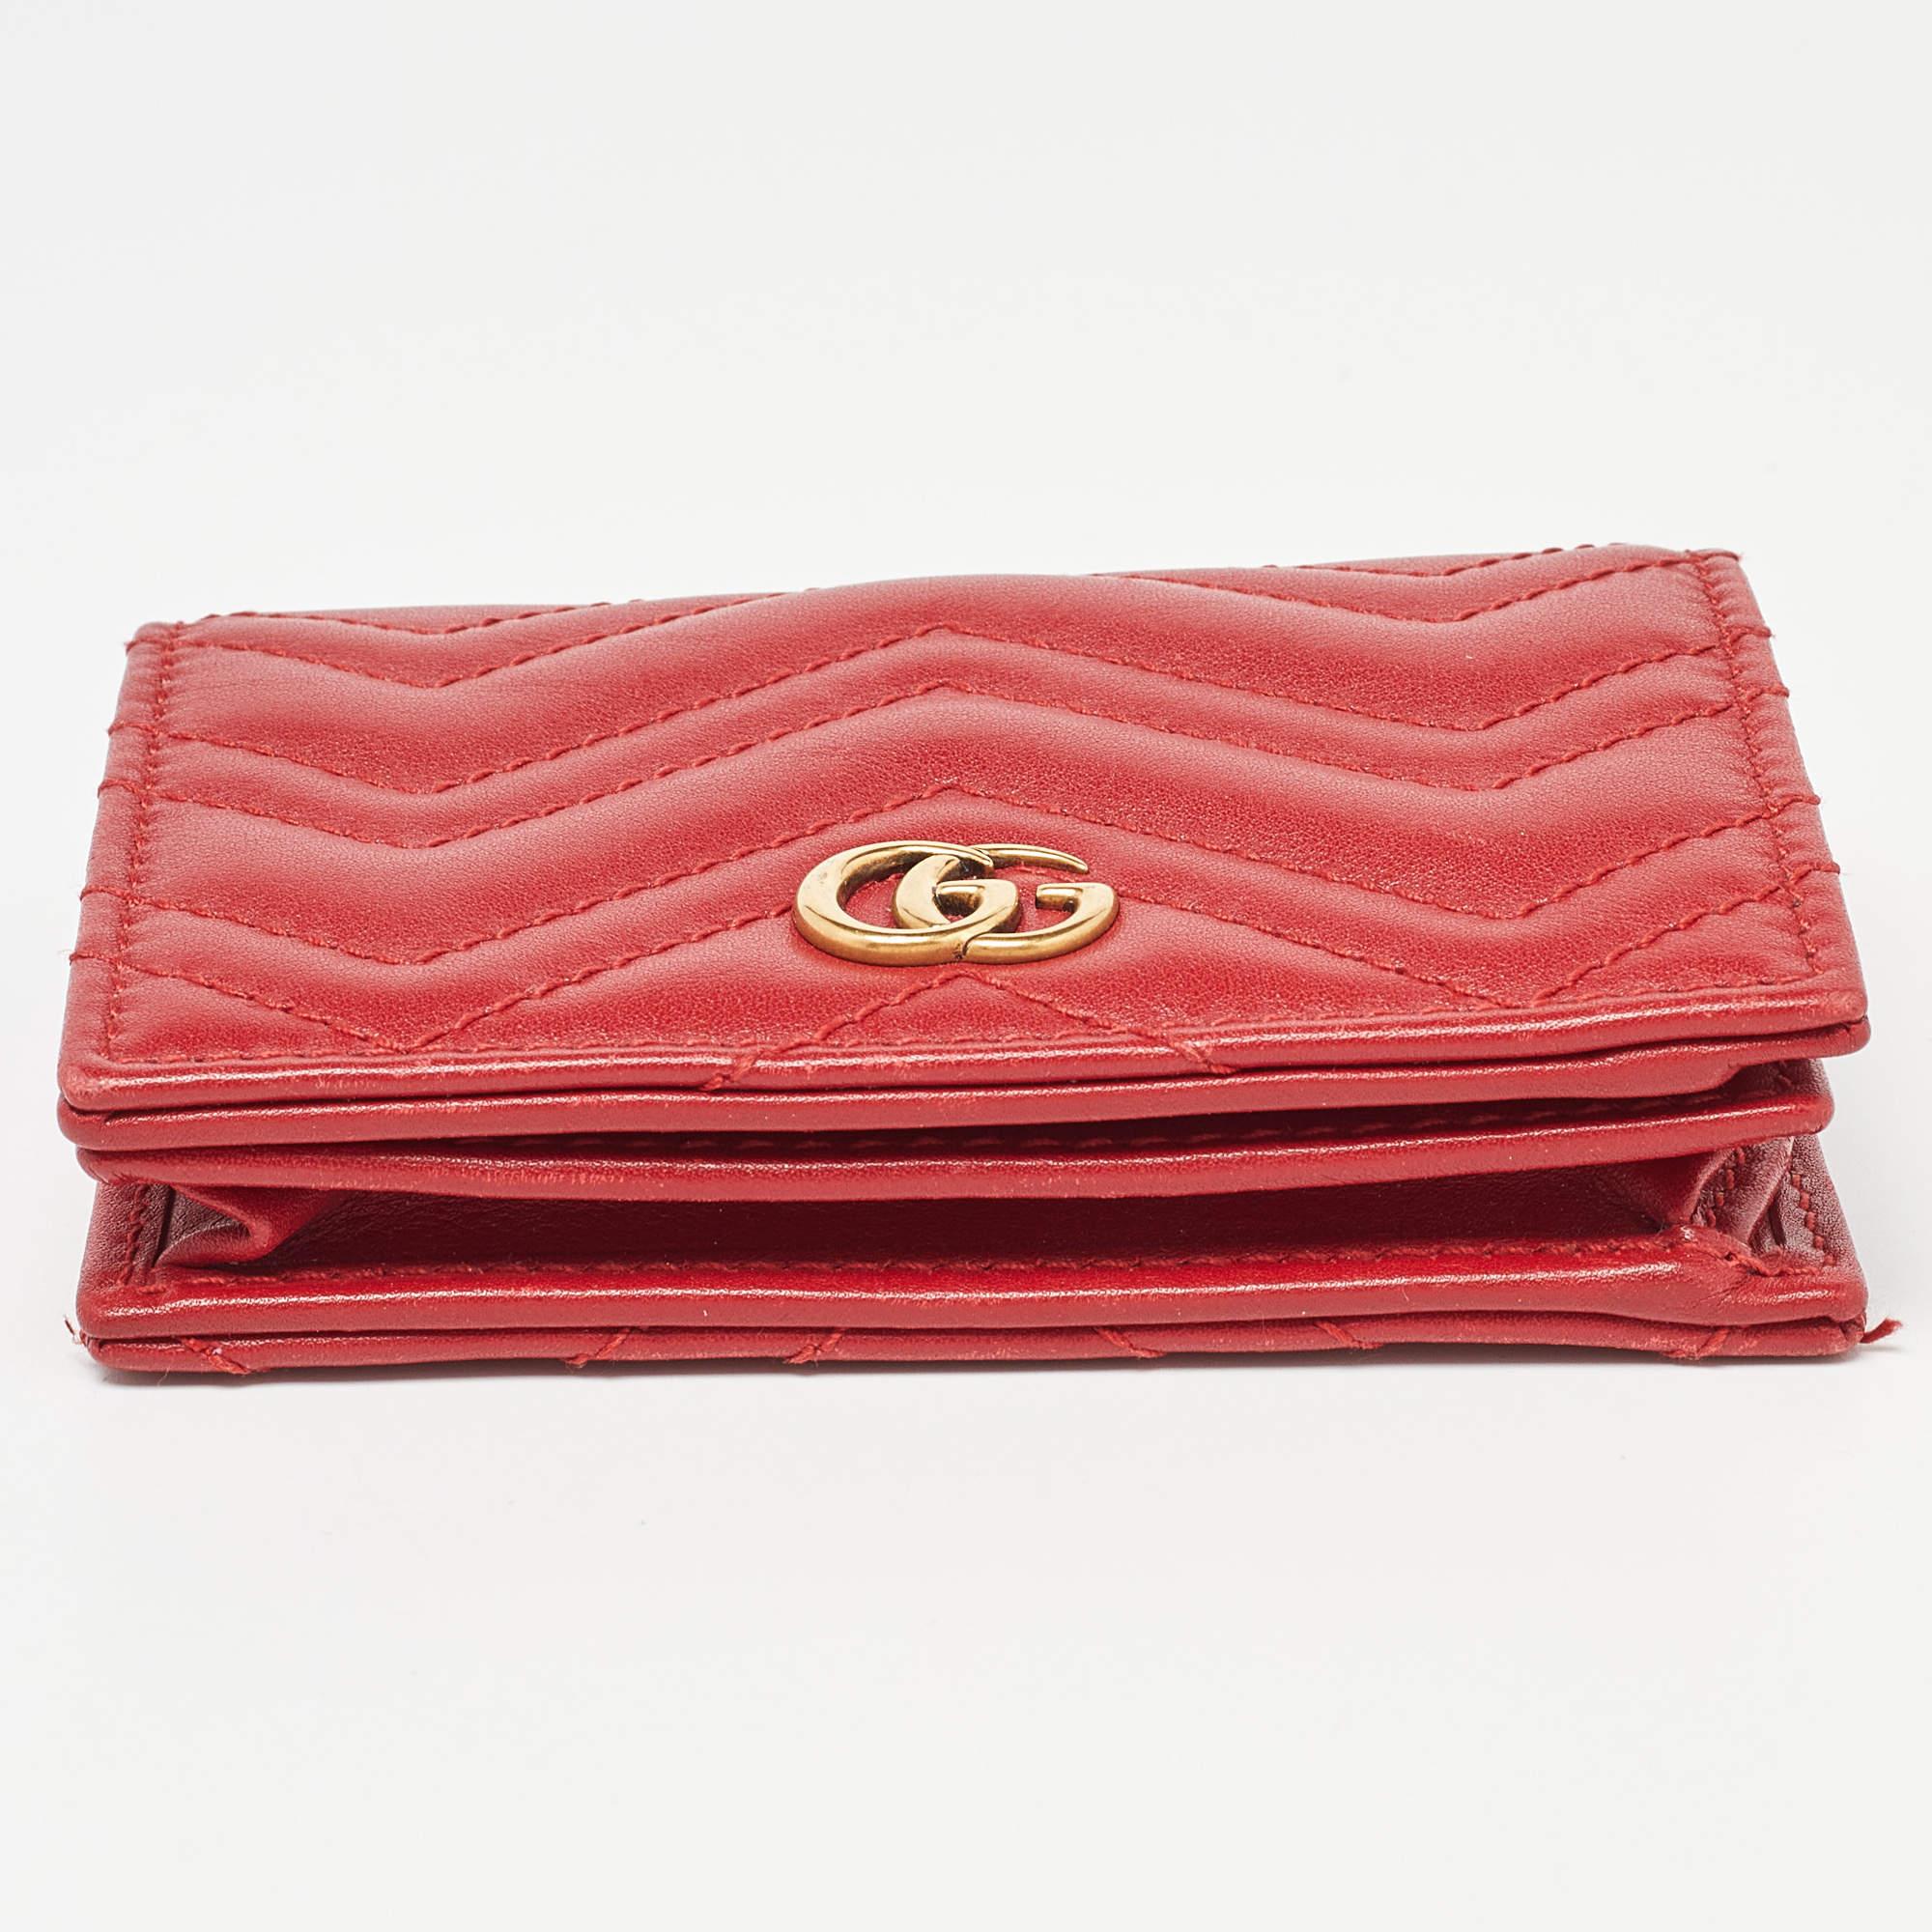 Gucci Red Matelassé Leather GG Marmont Flap Card Case 3